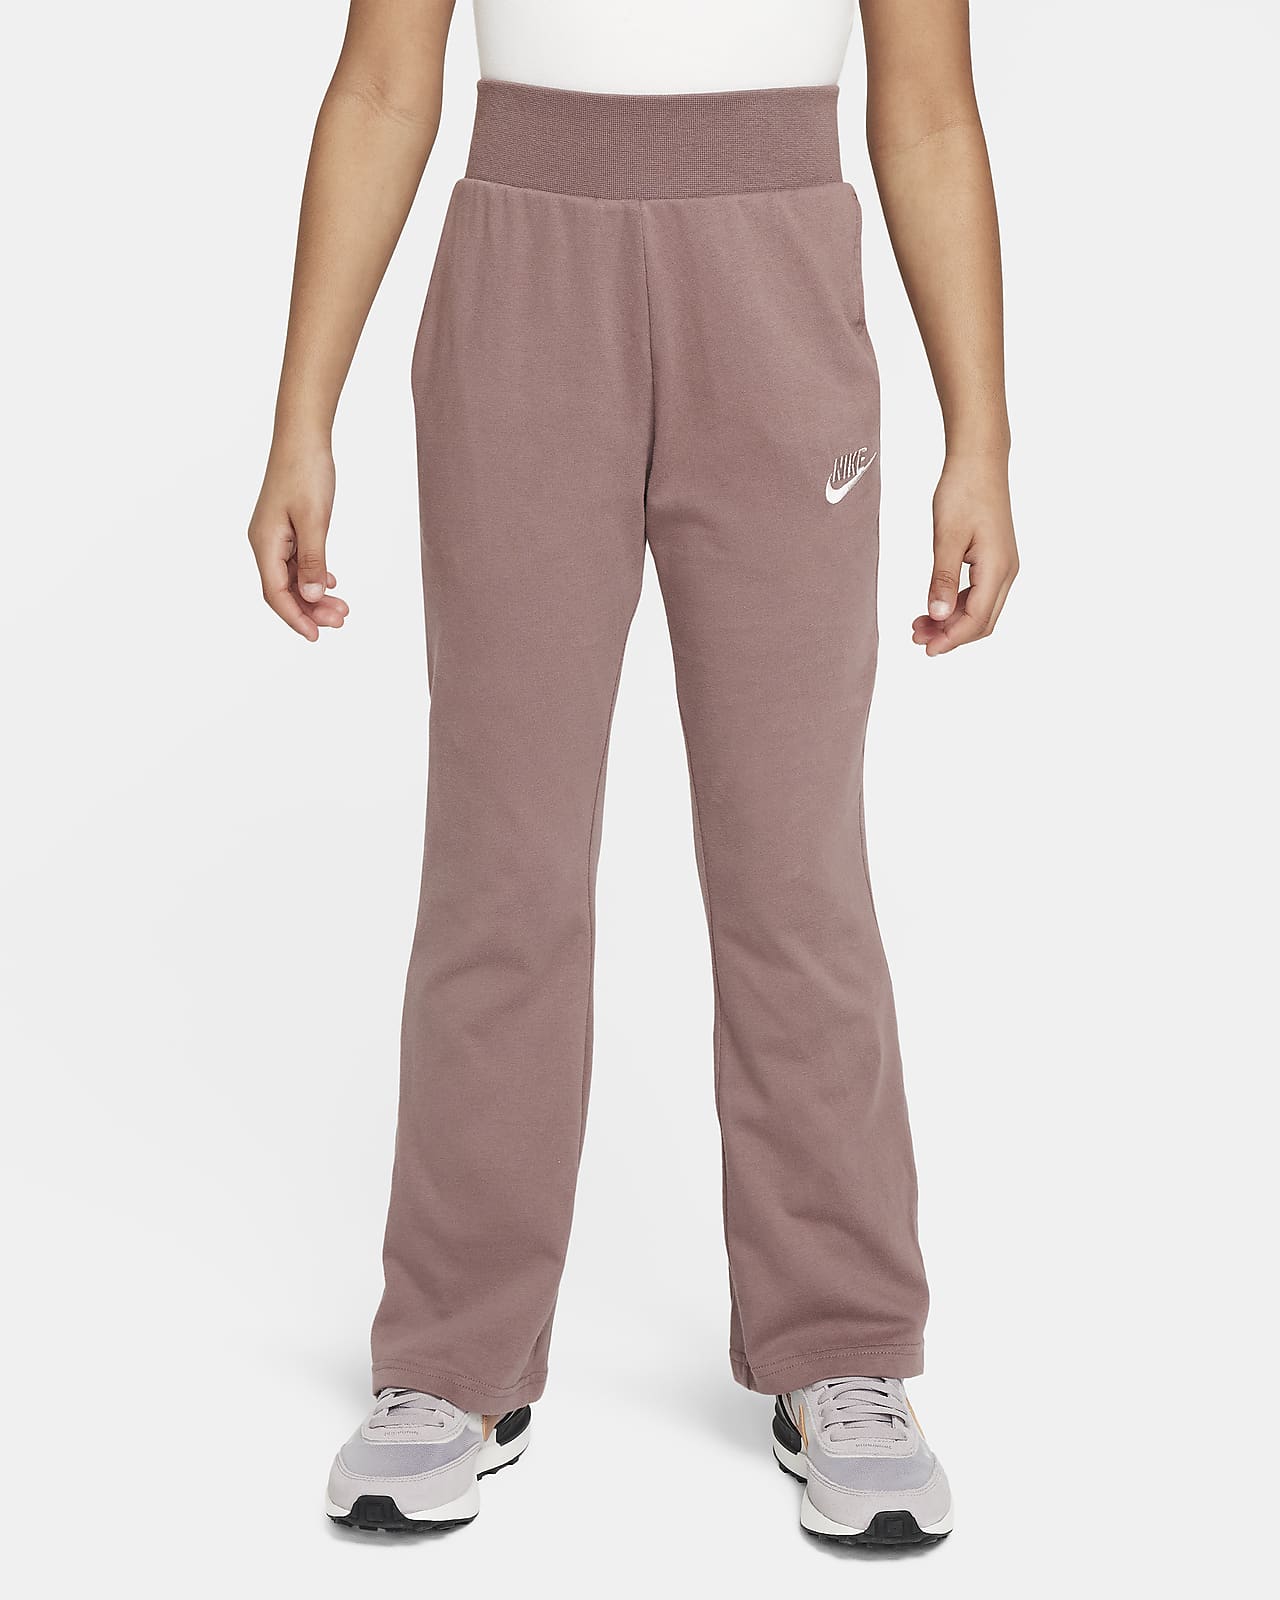 Nike Flare Sweatpants Size XS - $22 - From birgit